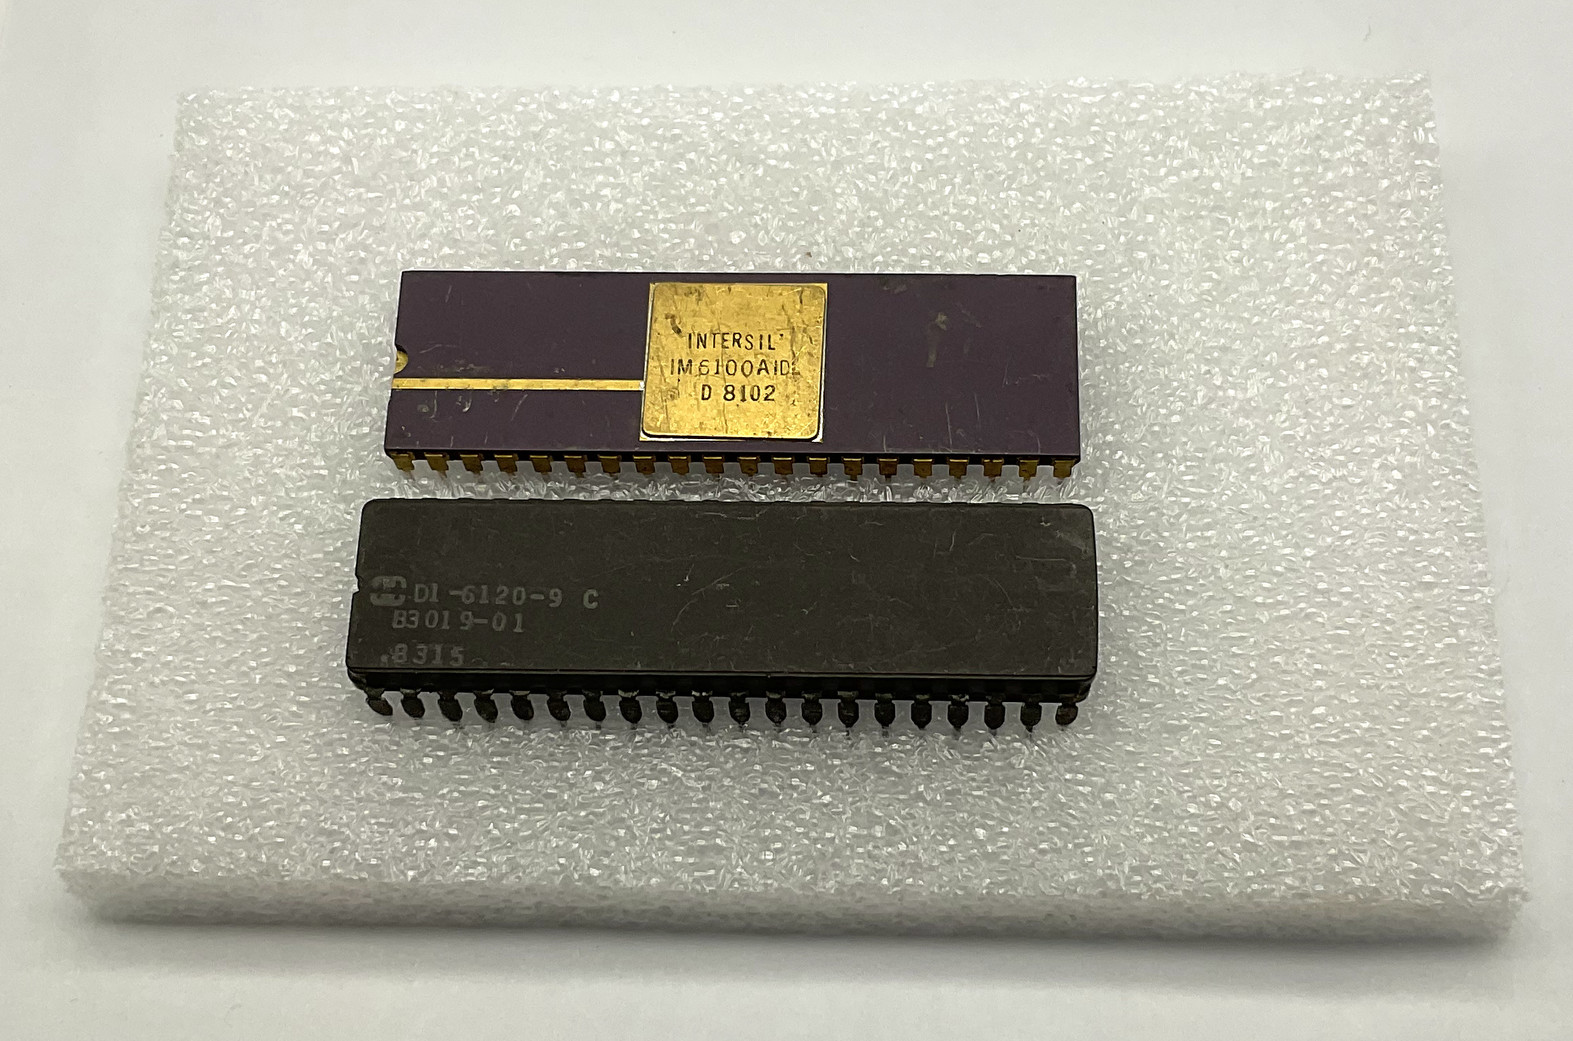 Intersil IM-6100 & Harris HD-6120 microprocessor